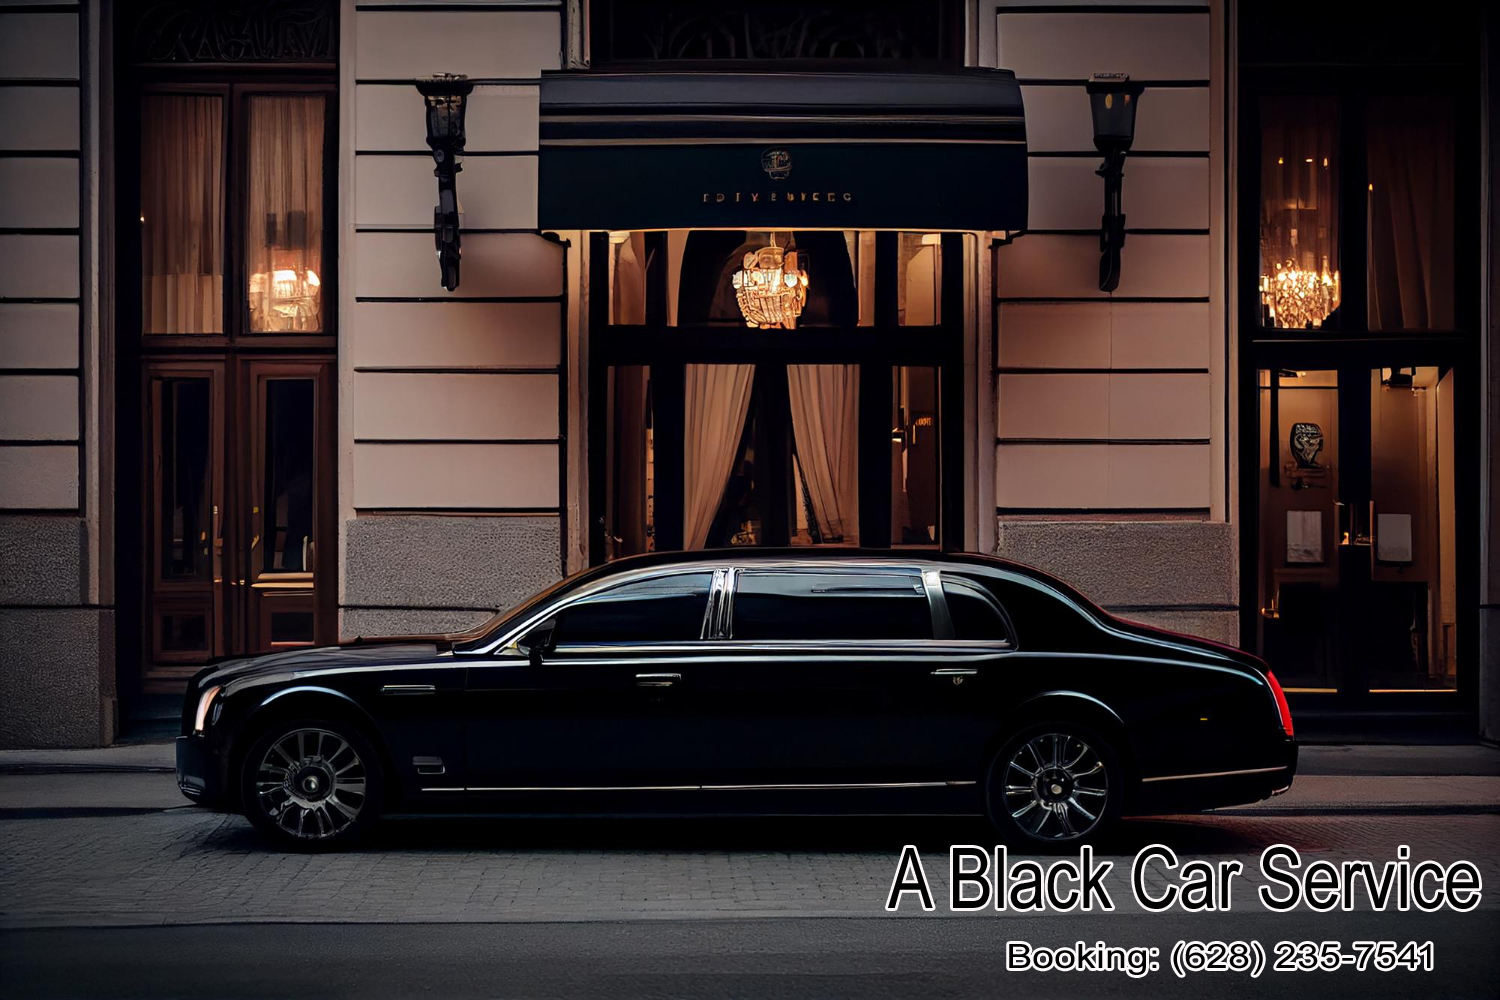 a black car service